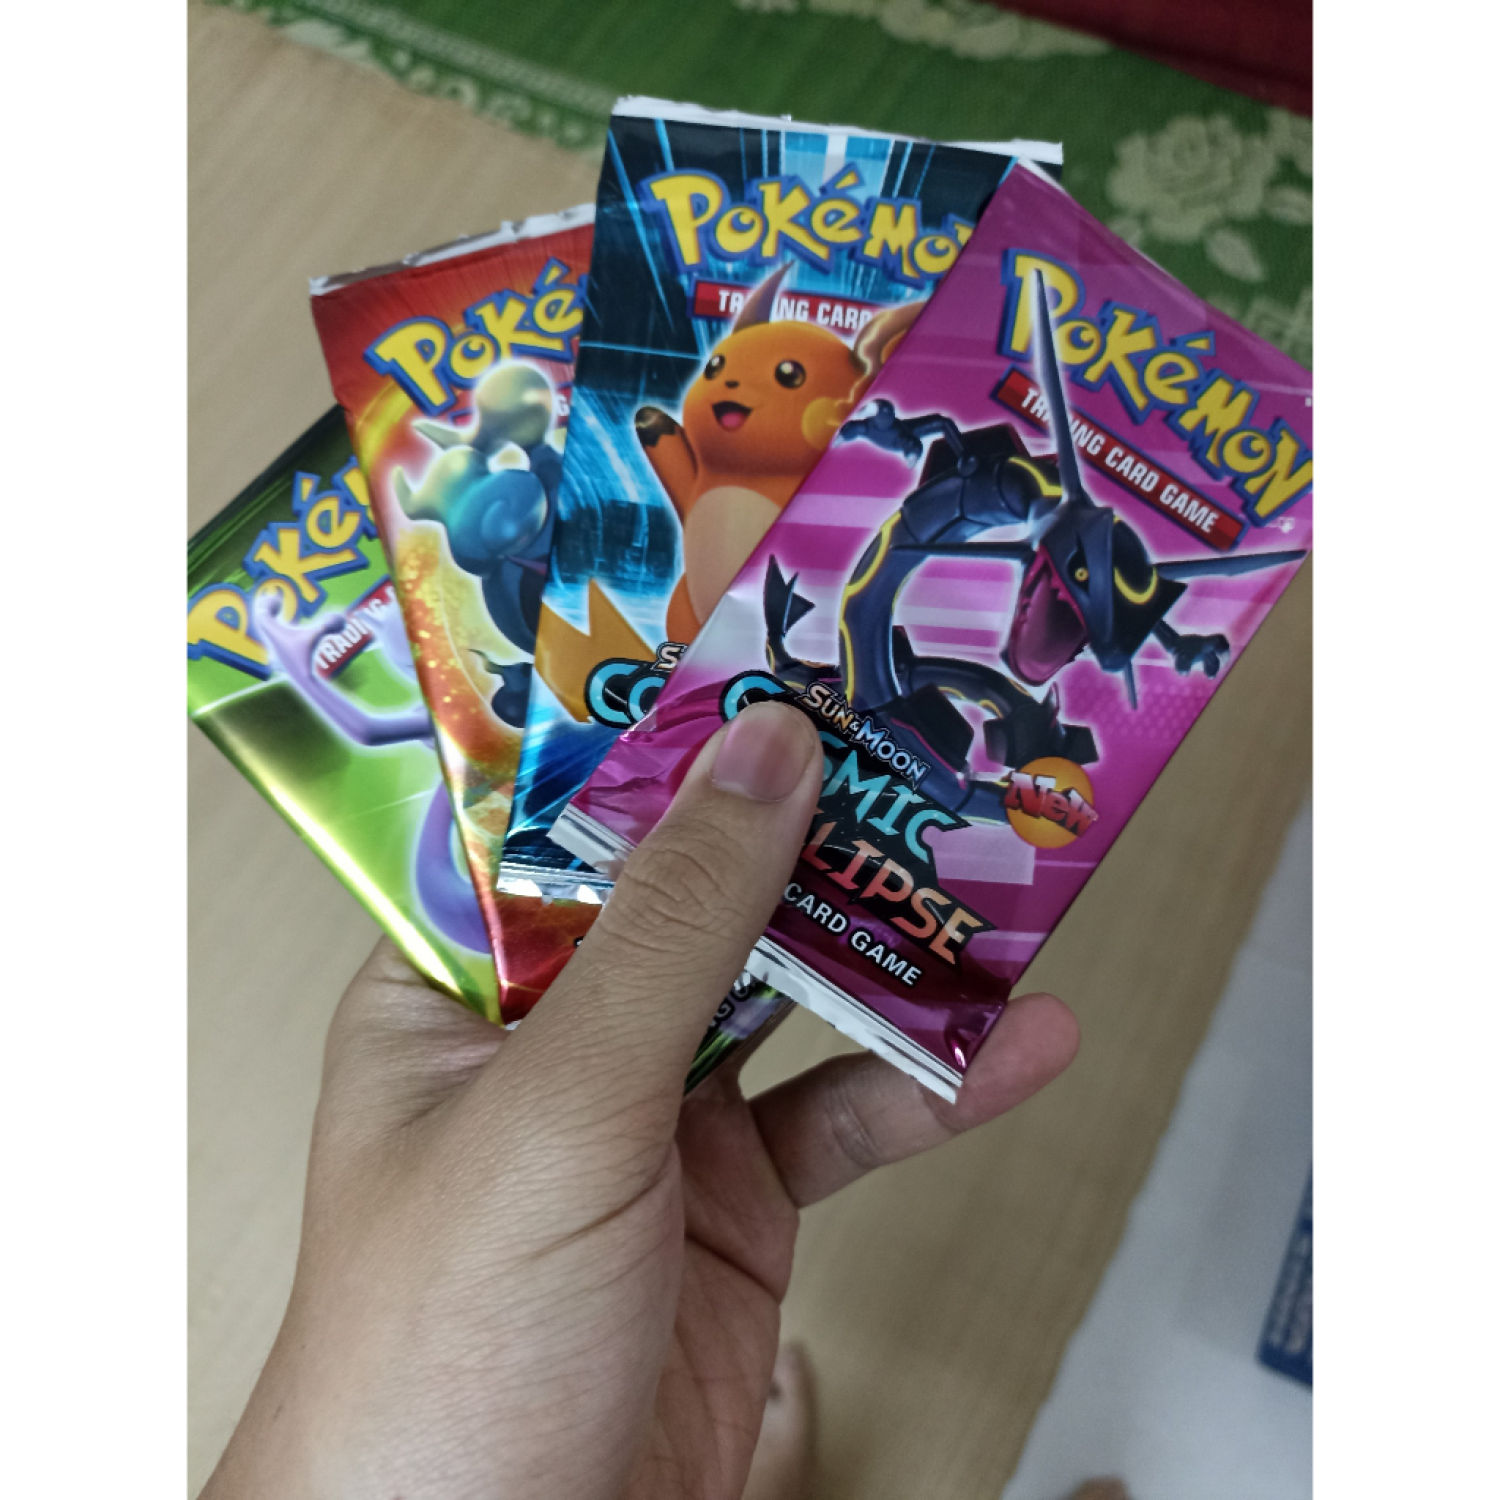 SALE Thẻ nhân phẩm Pokemon mua 10 gói tặng 1